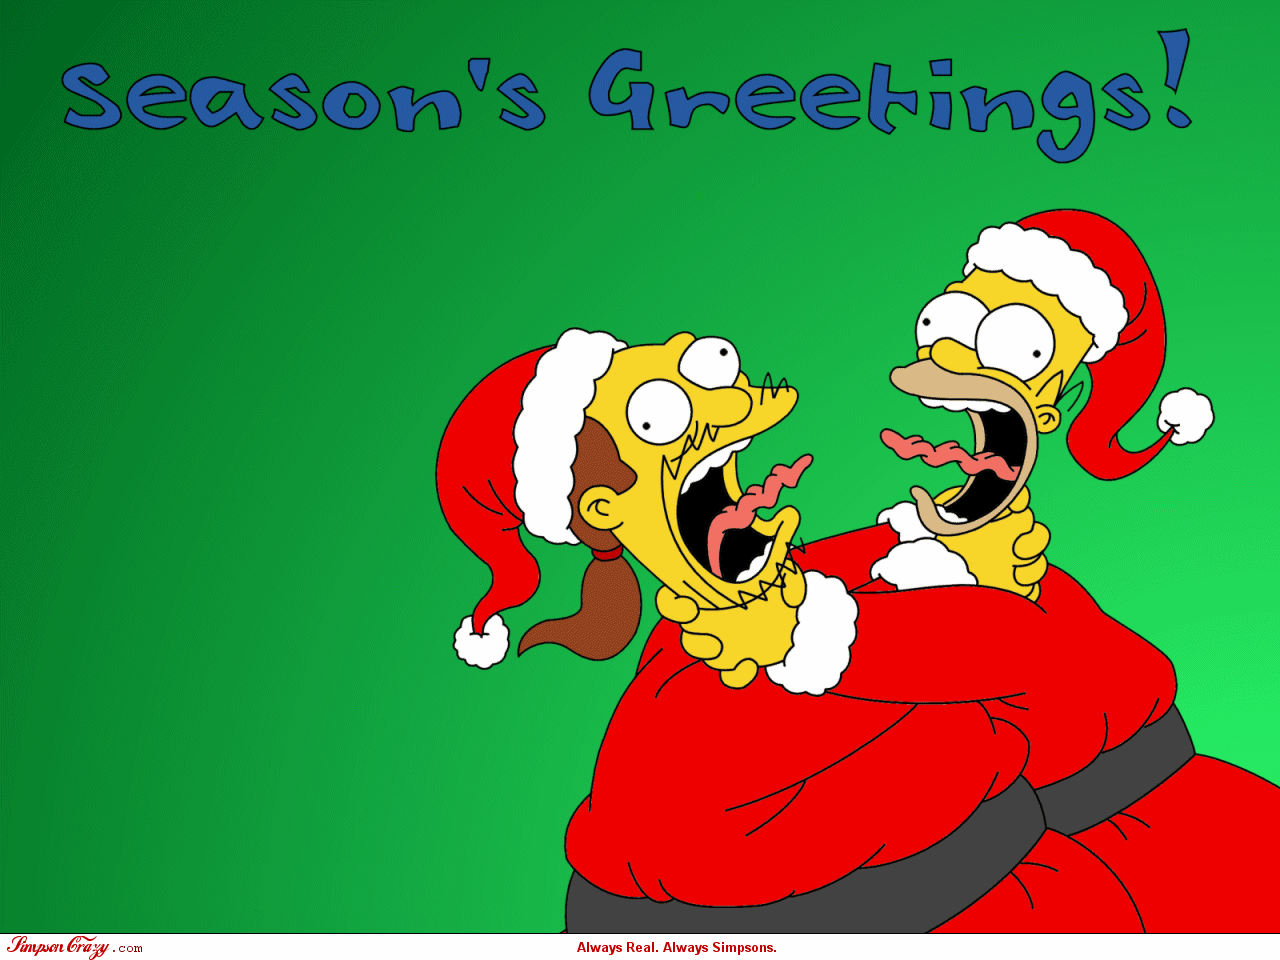 Simpsons Christmas wallpaper 33800